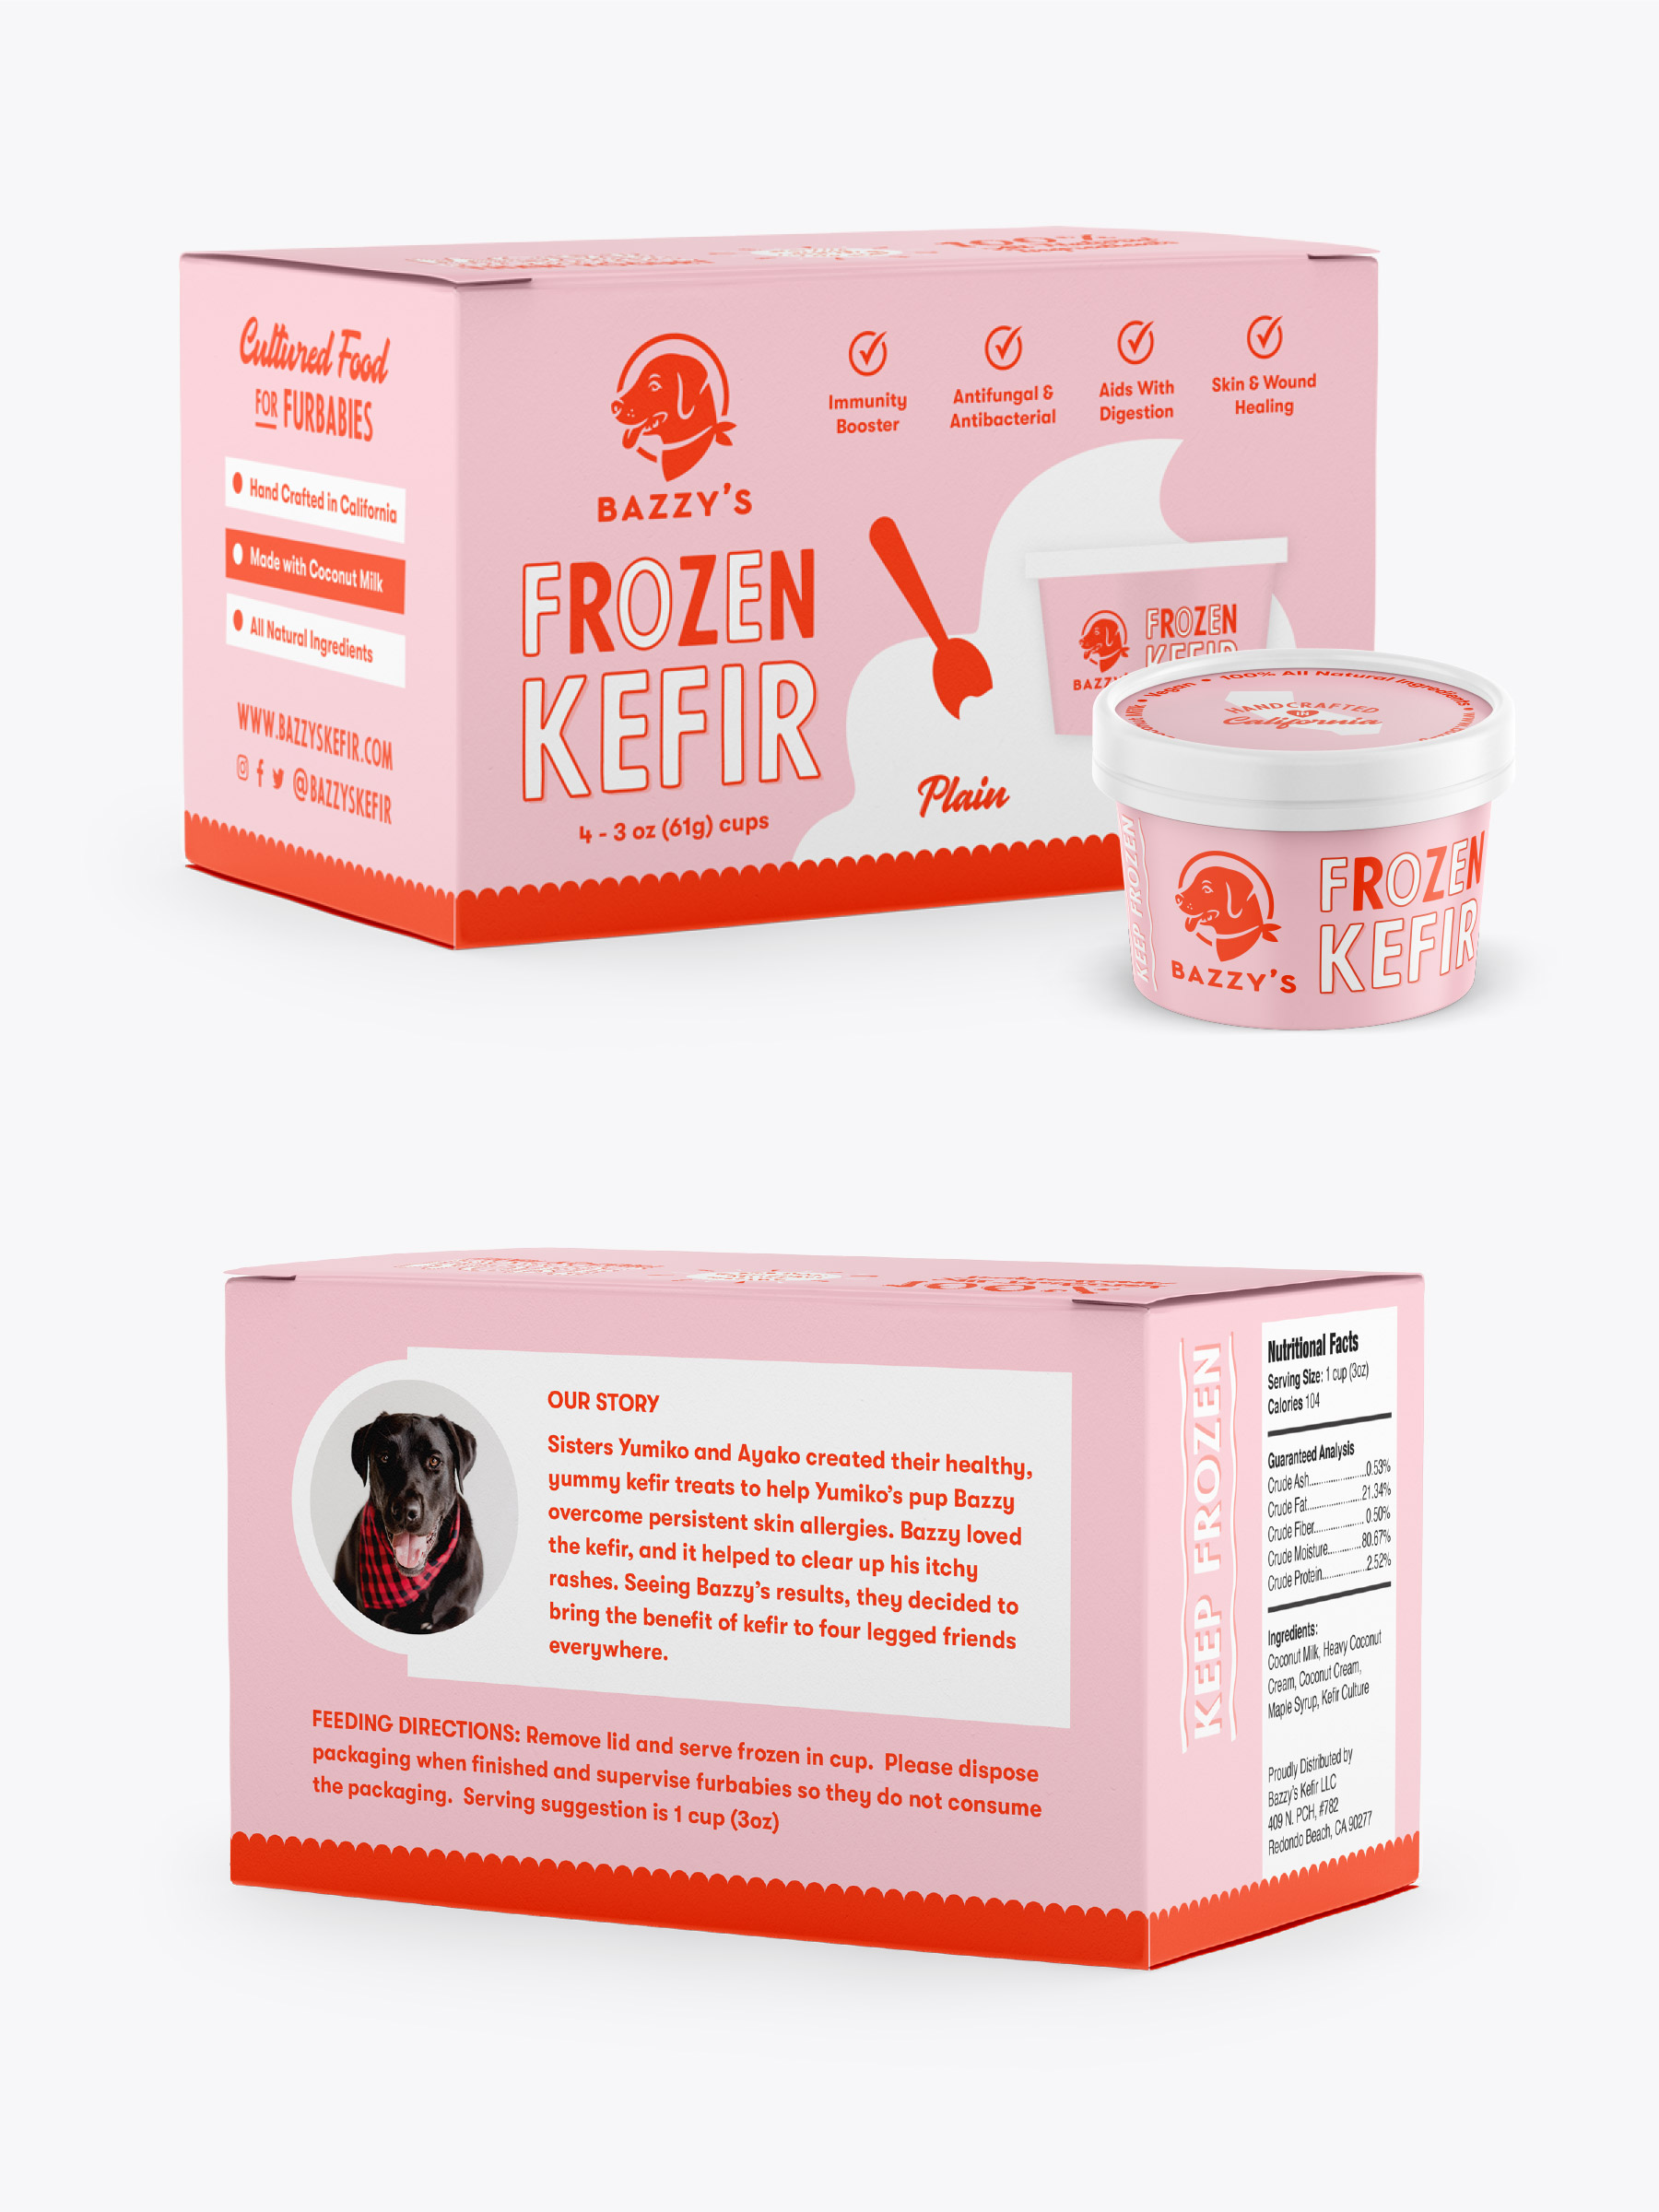 Kraftboard box packaging design for frozen dog treats